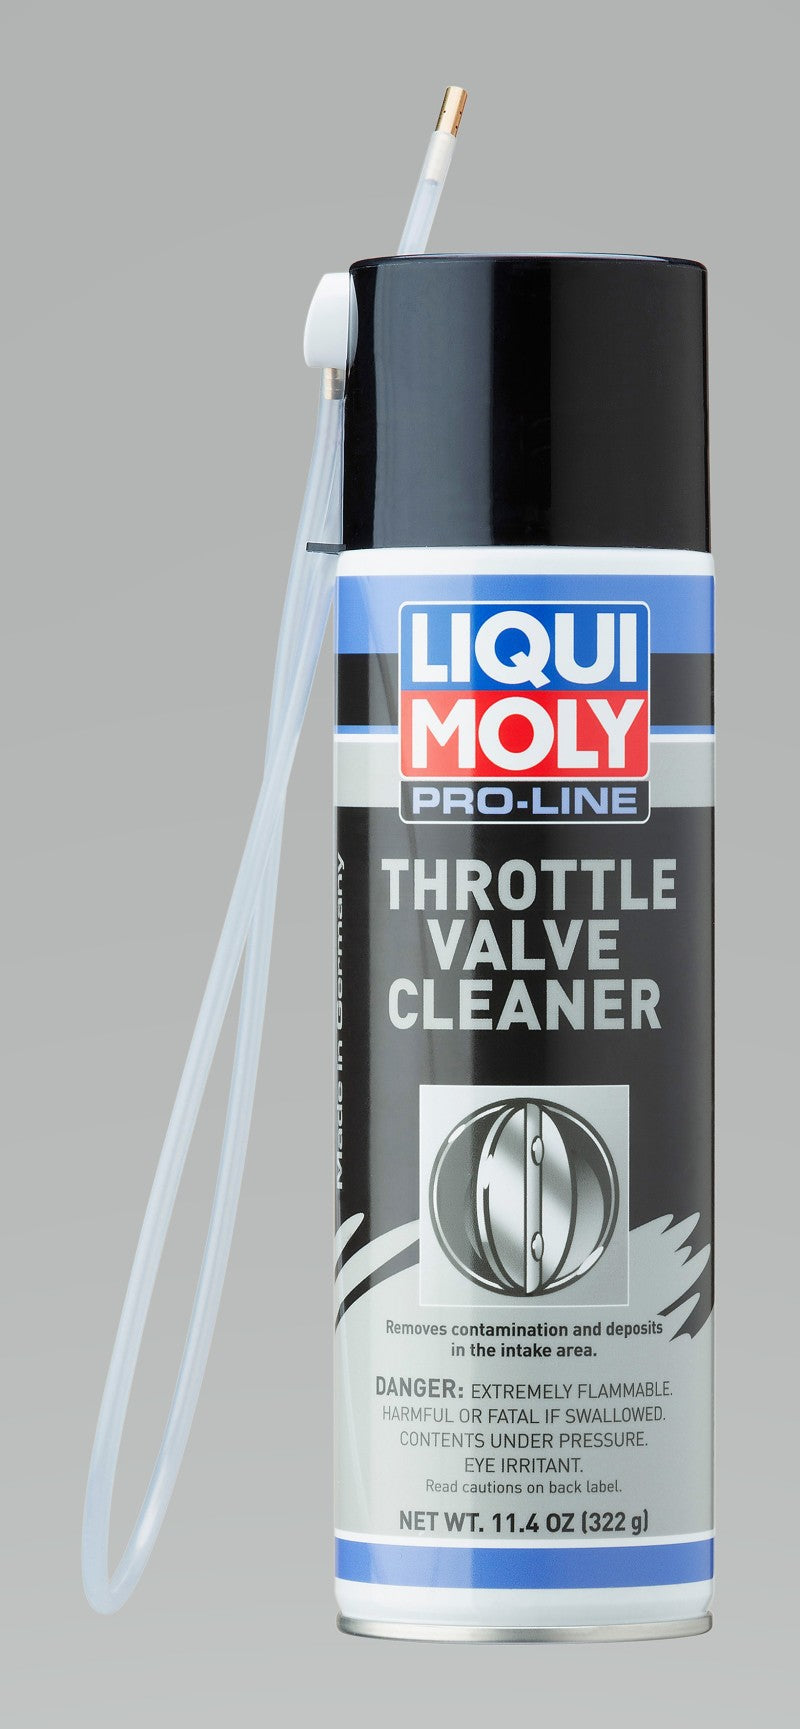 LIQUI MOLY 400mL Pro-Line Throttle Valve Cleaner - Case of 6